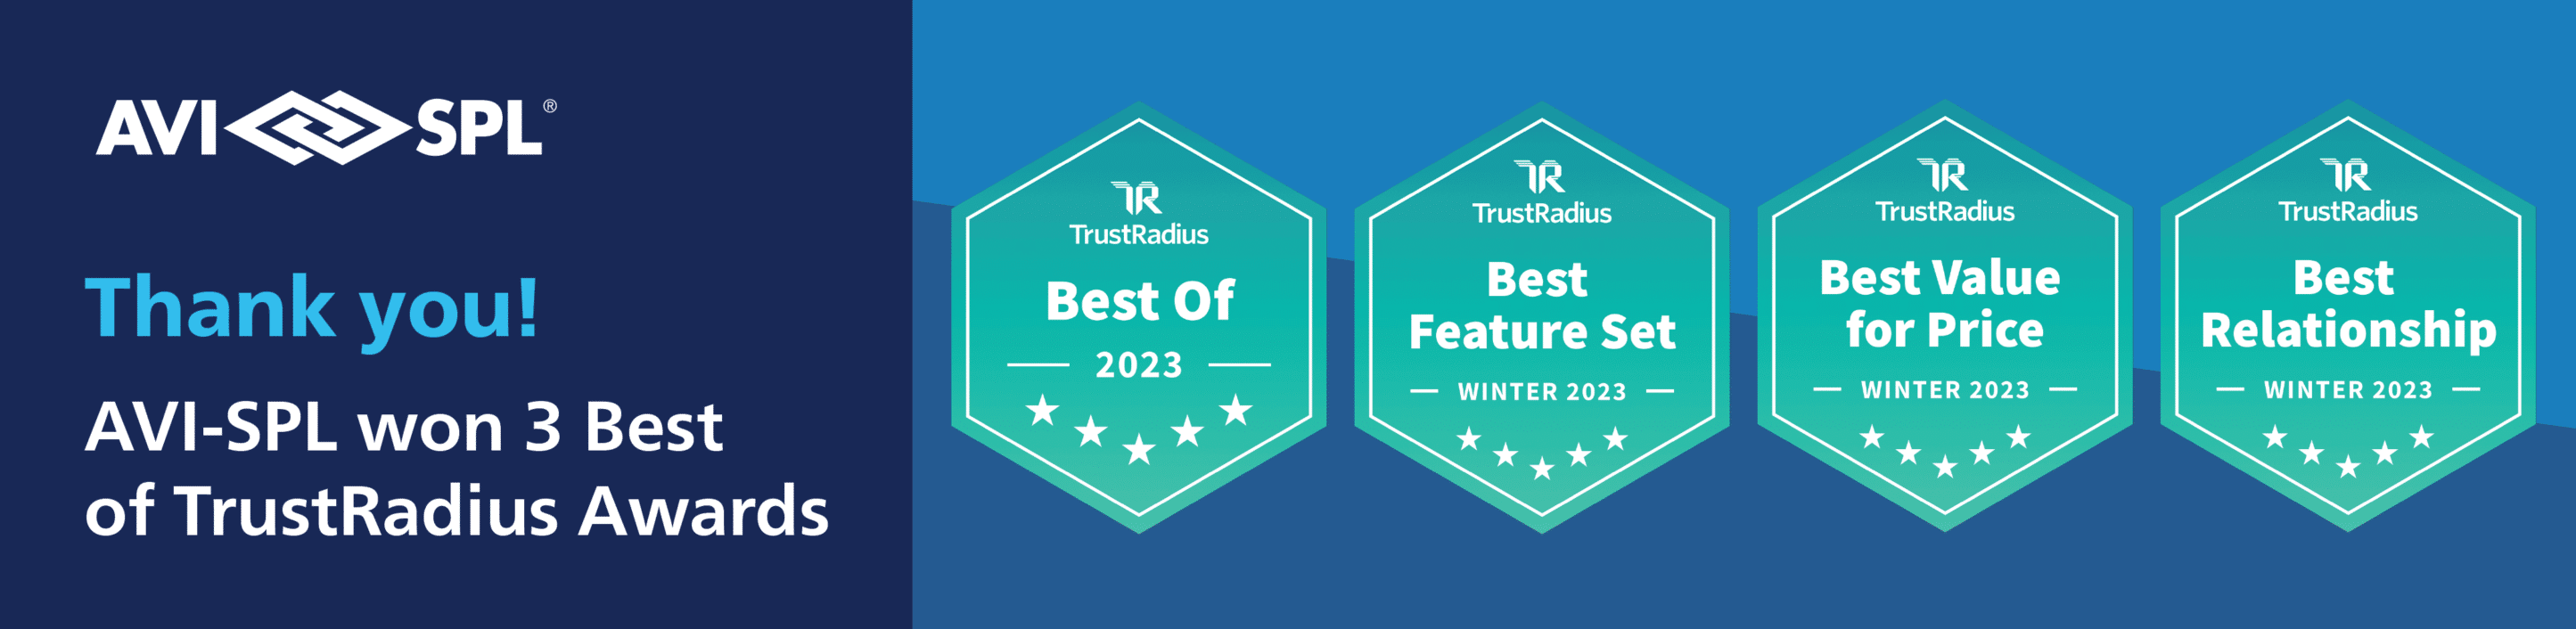 AVI-SPL won 3 Winter 2023 Trust Radius awards for video conferencing